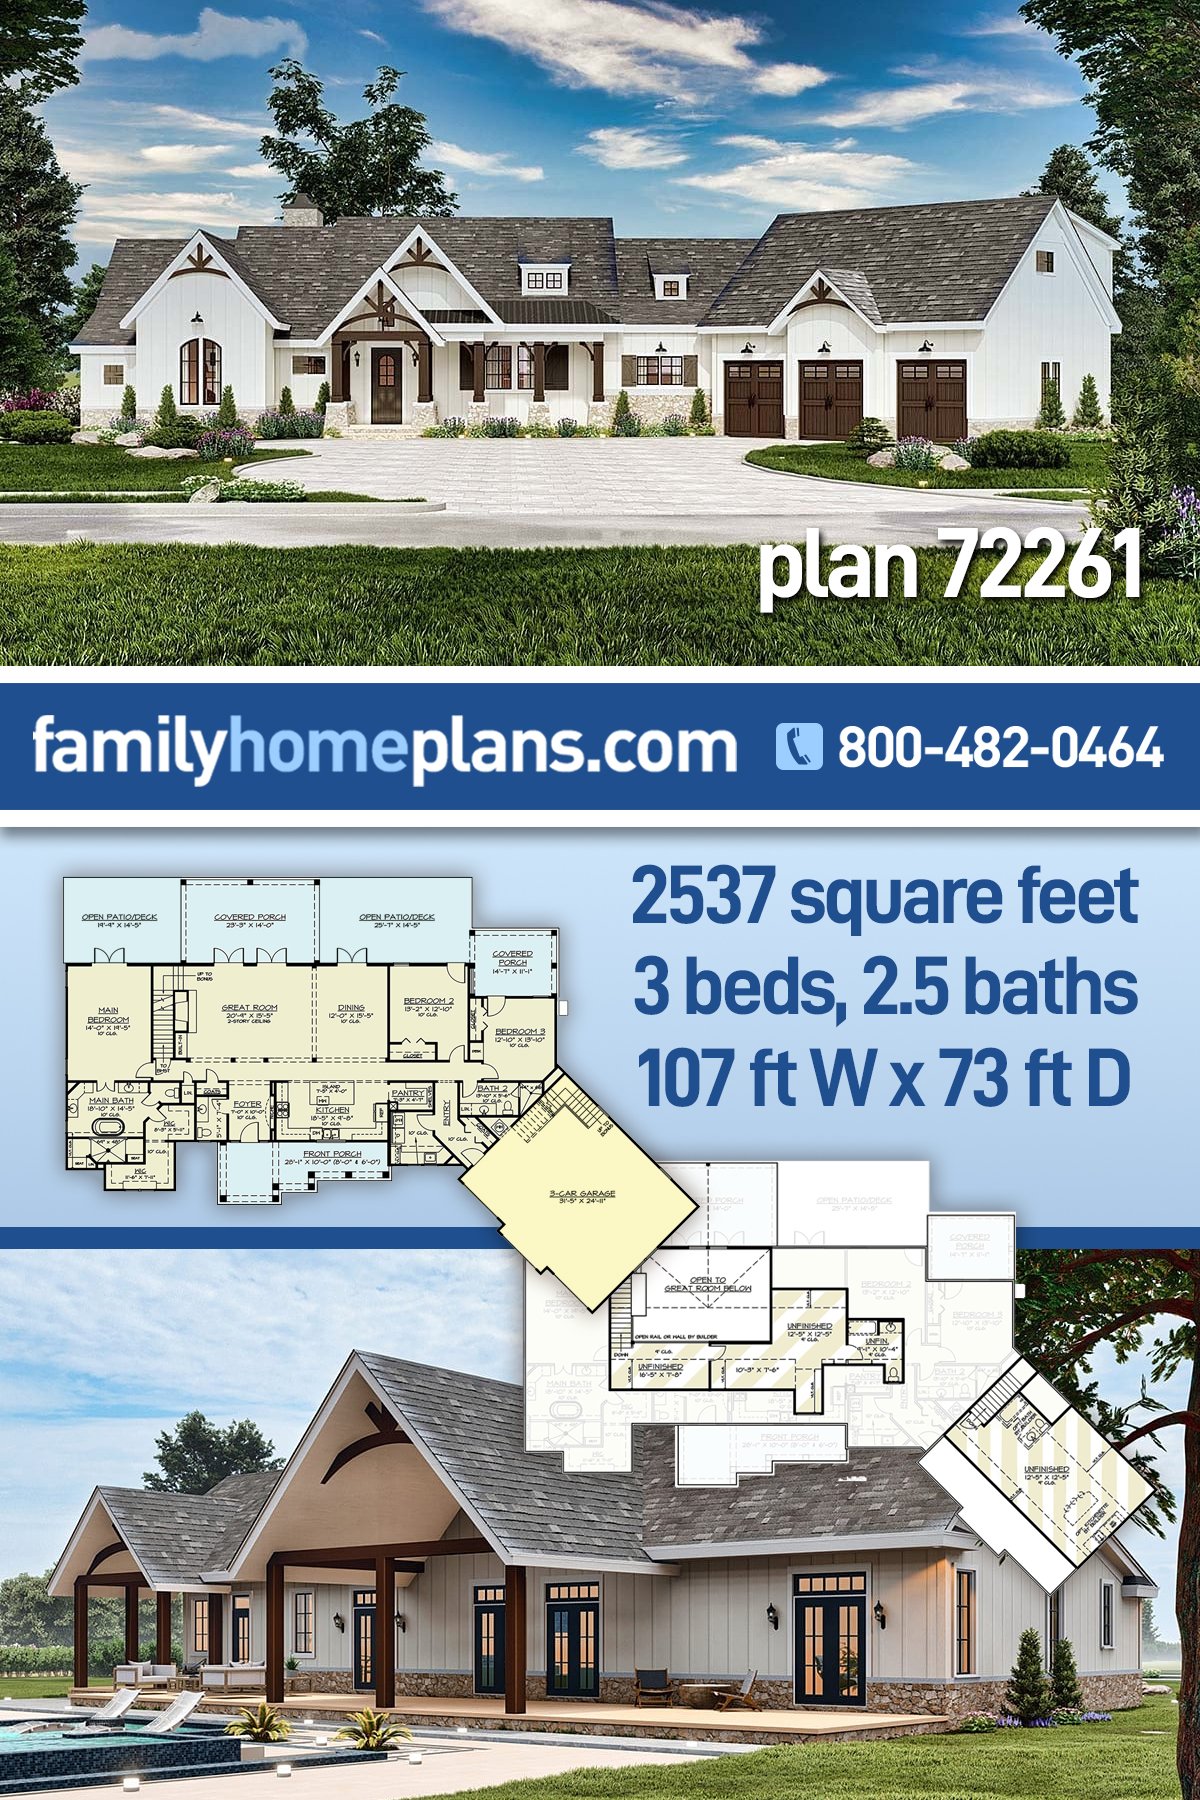 House Plan 72261